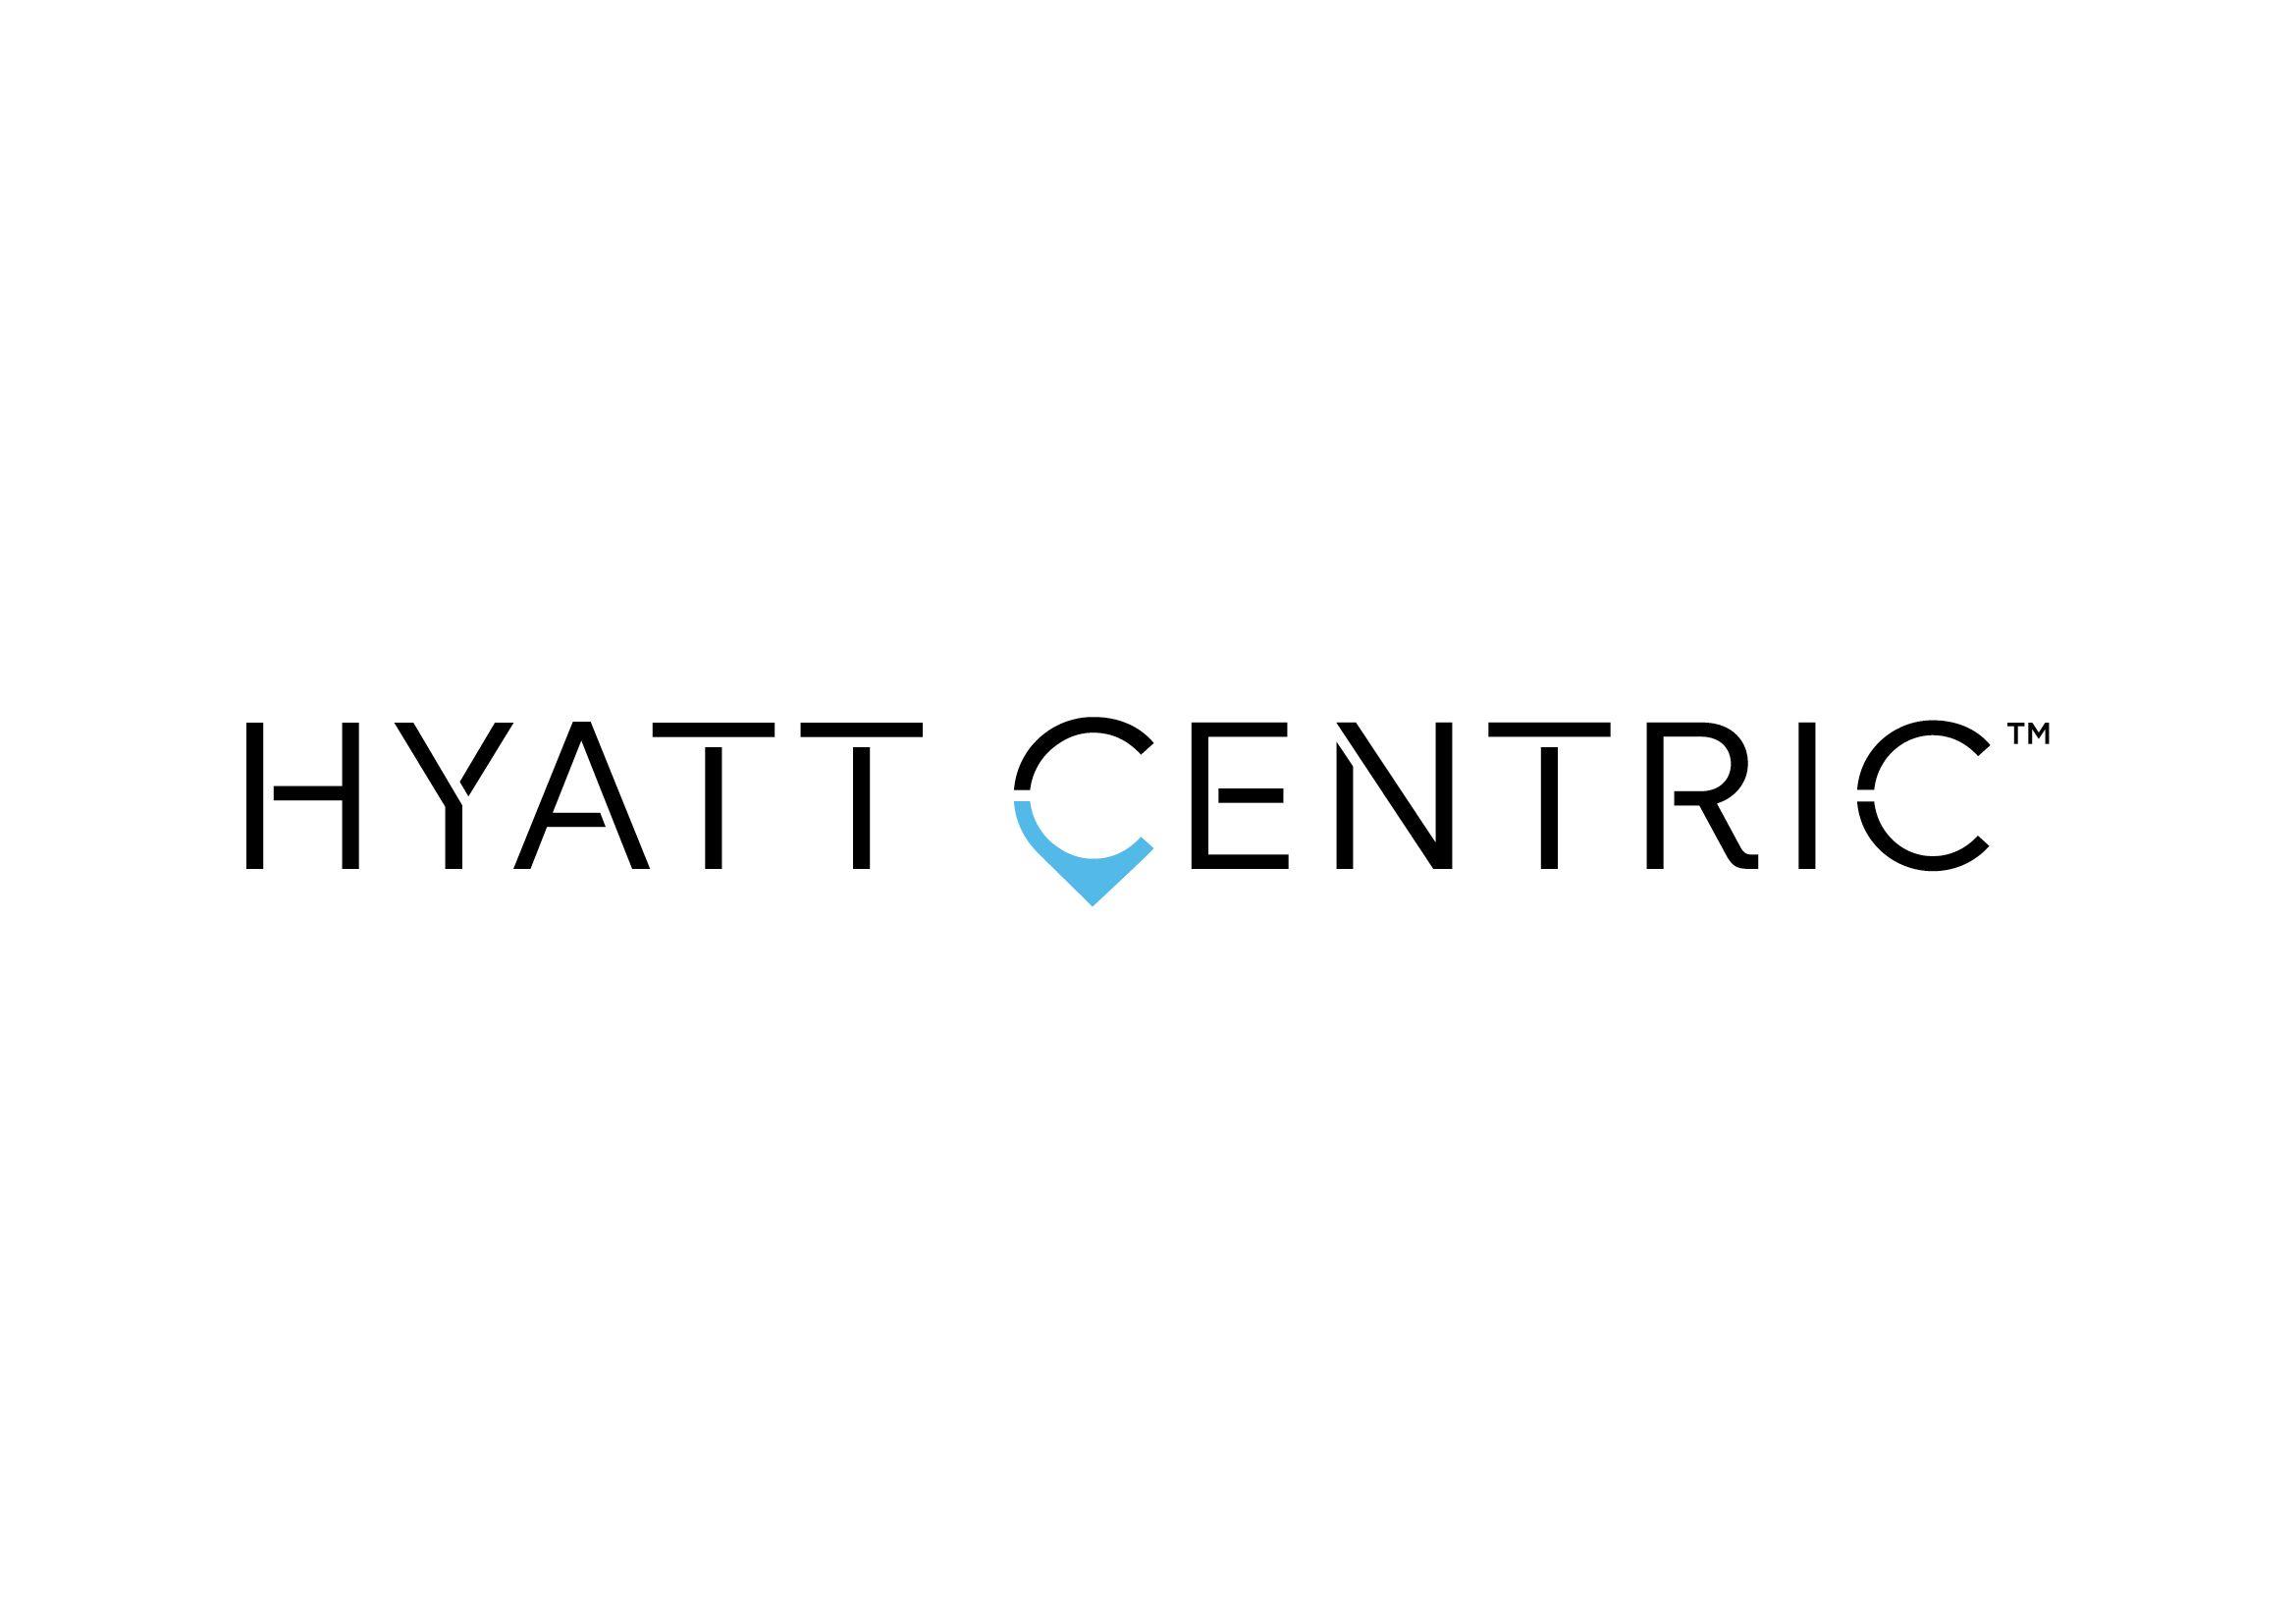 Centric Logo - Hyatt Centric Logo. All The Write Places